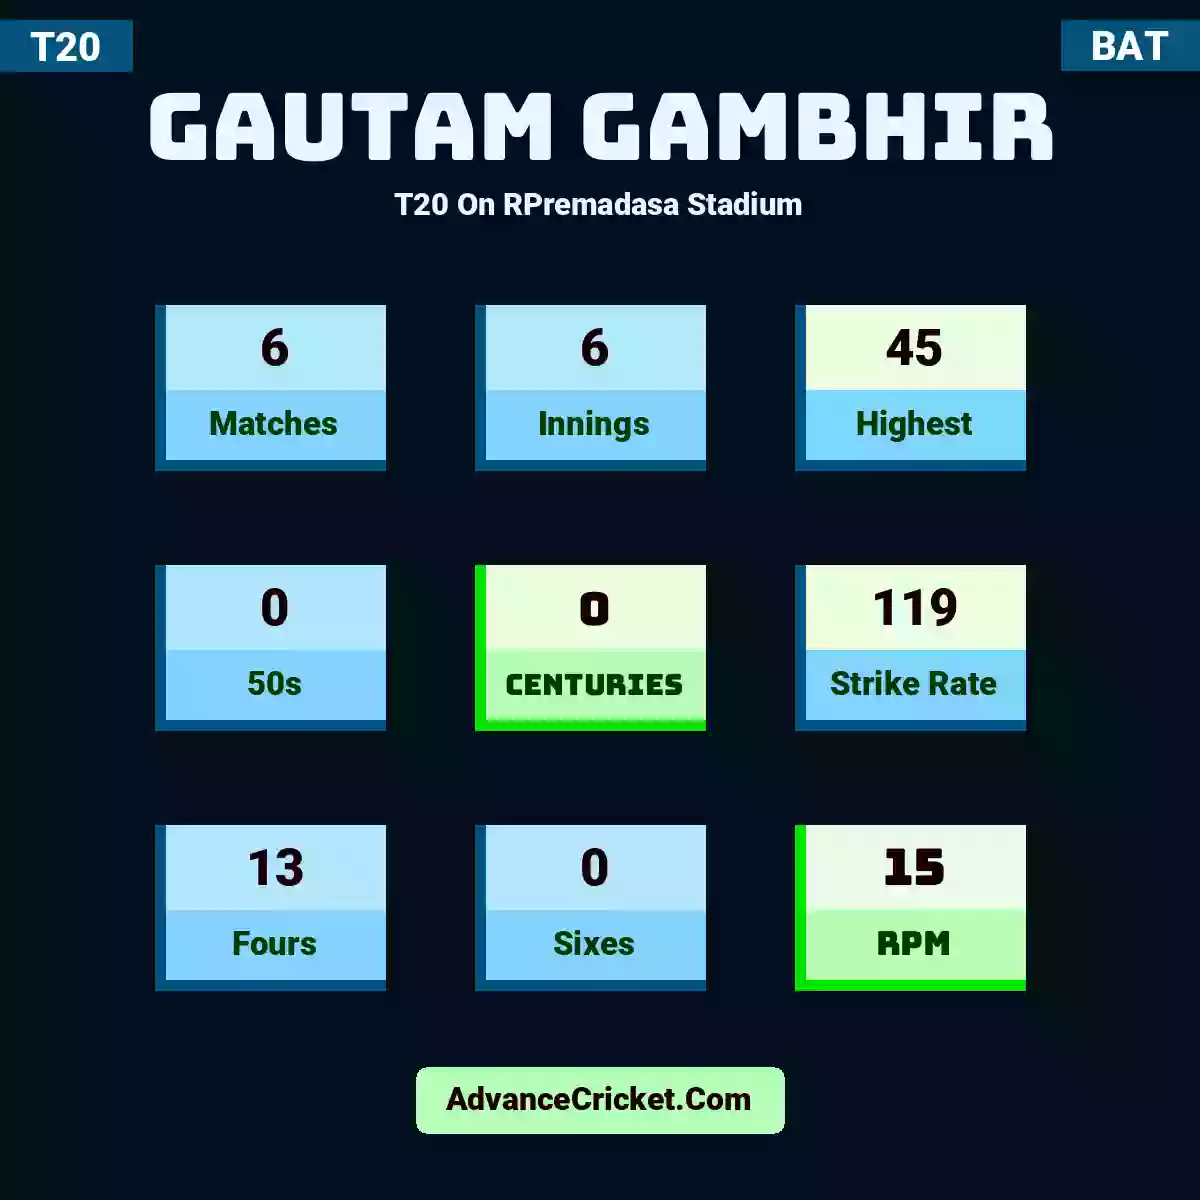 Gautam Gambhir T20  On RPremadasa Stadium, Gautam Gambhir played 6 matches, scored 45 runs as highest, 0 half-centuries, and 0 centuries, with a strike rate of 119. G.Gambhir hit 13 fours and 0 sixes, with an RPM of 15.